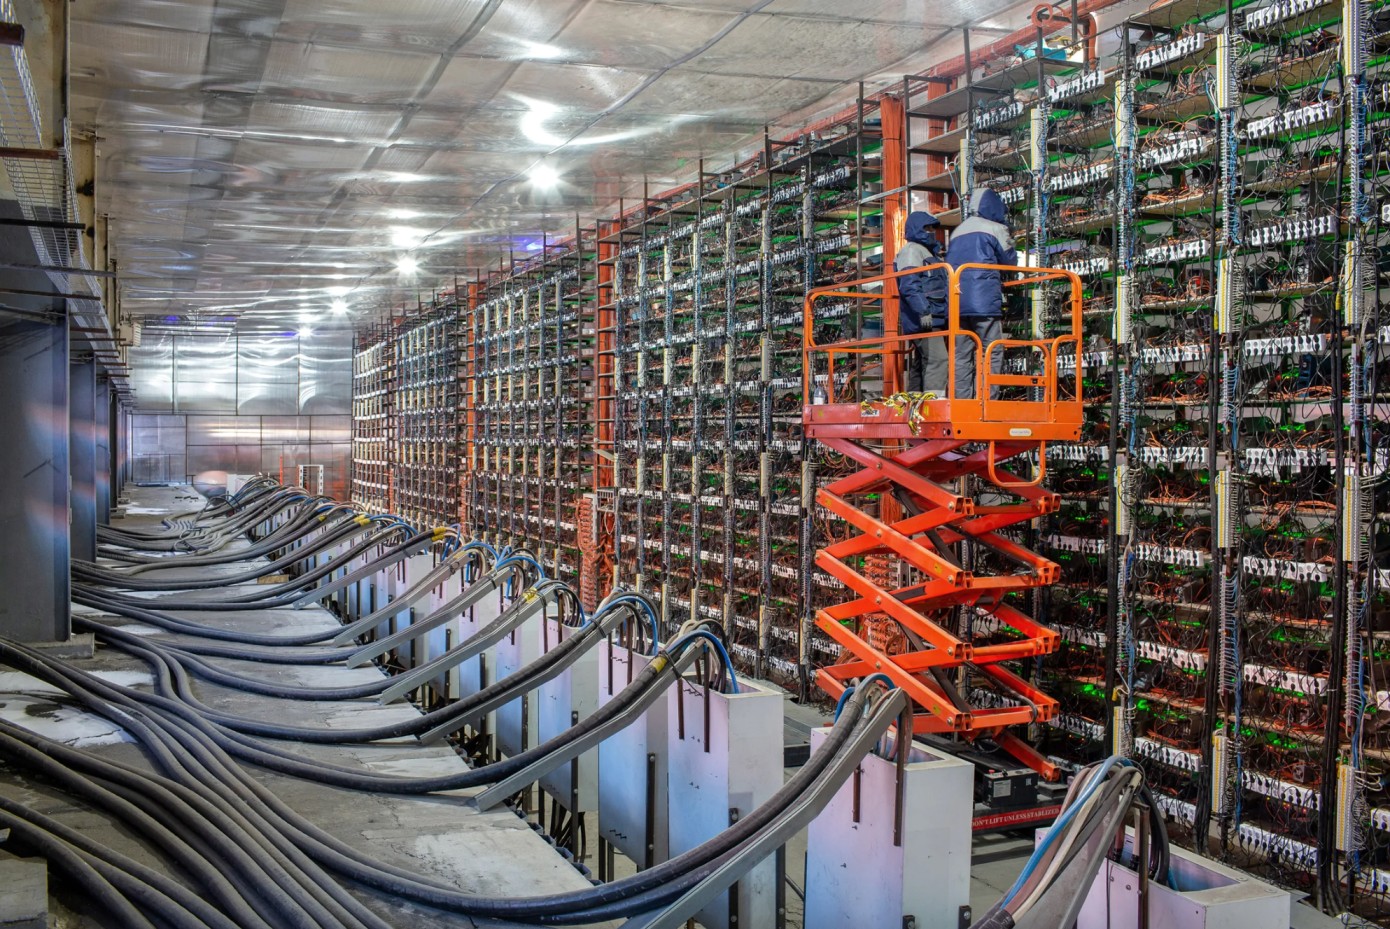 Cryptoverse: Bitcoin miners make money ahead of 'halving' | Reuters